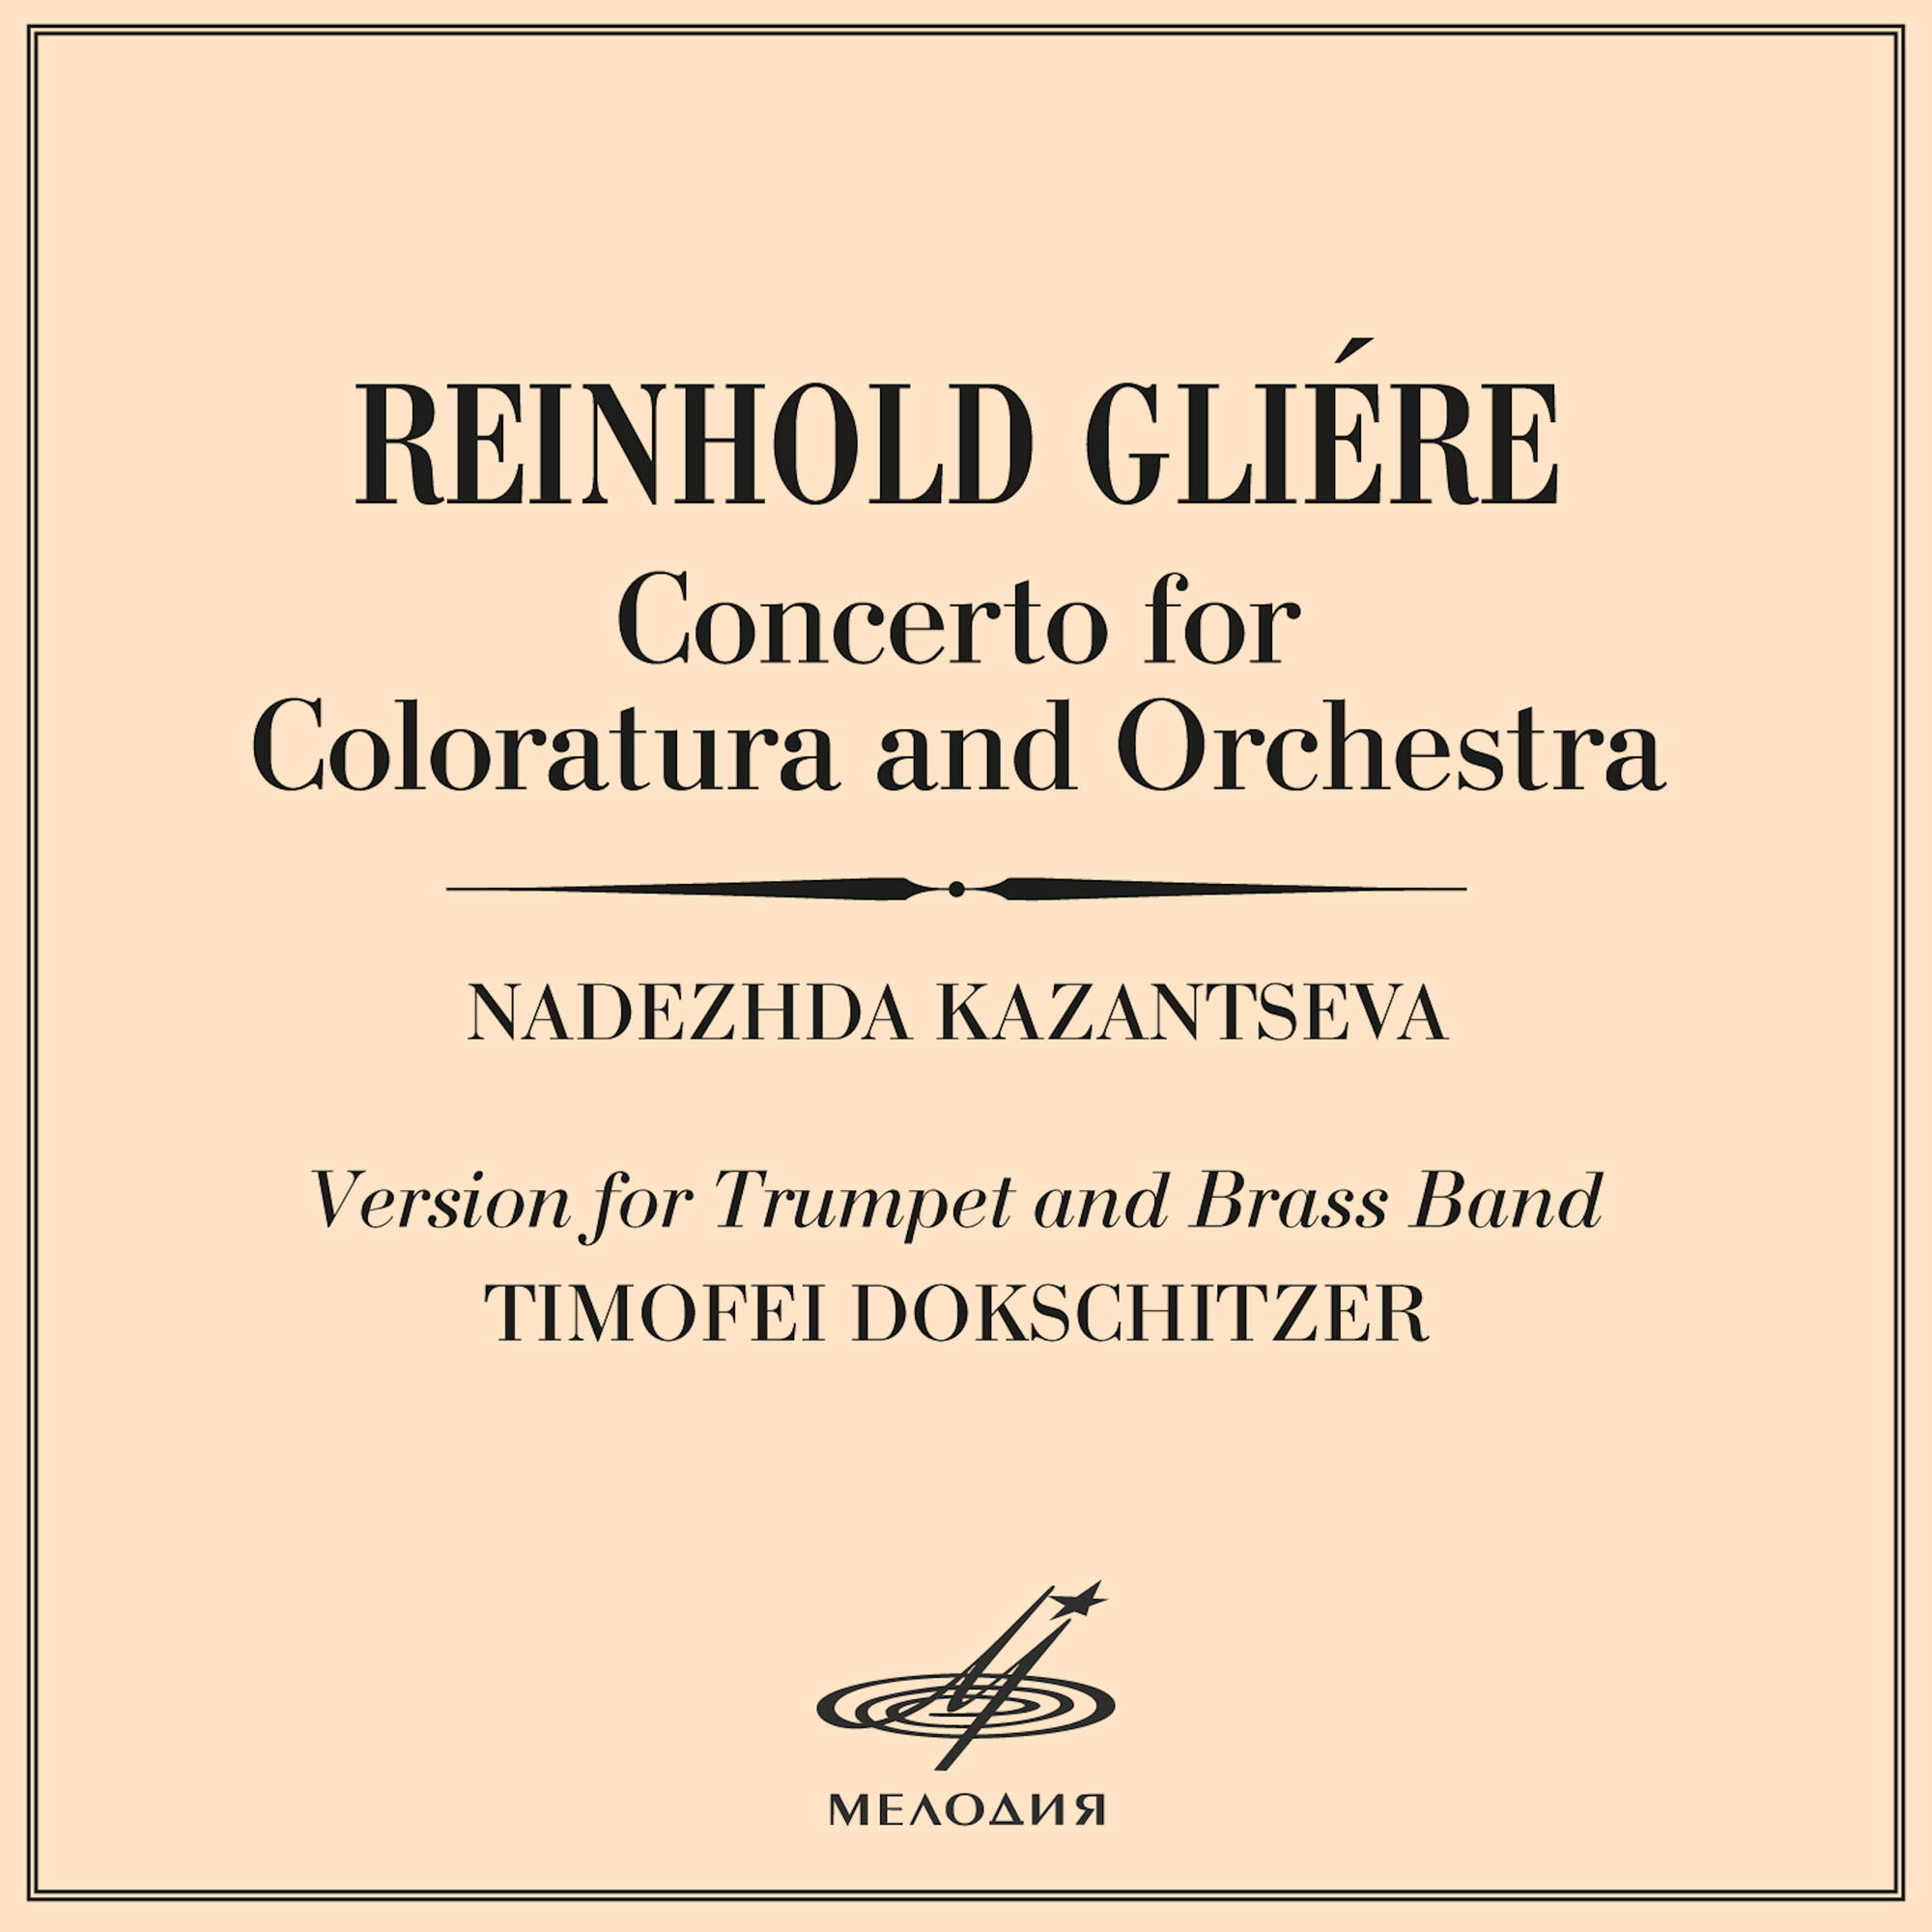 Р. Глиэр: Концерт для колоратурного сопрано с оркестром, соч. 82